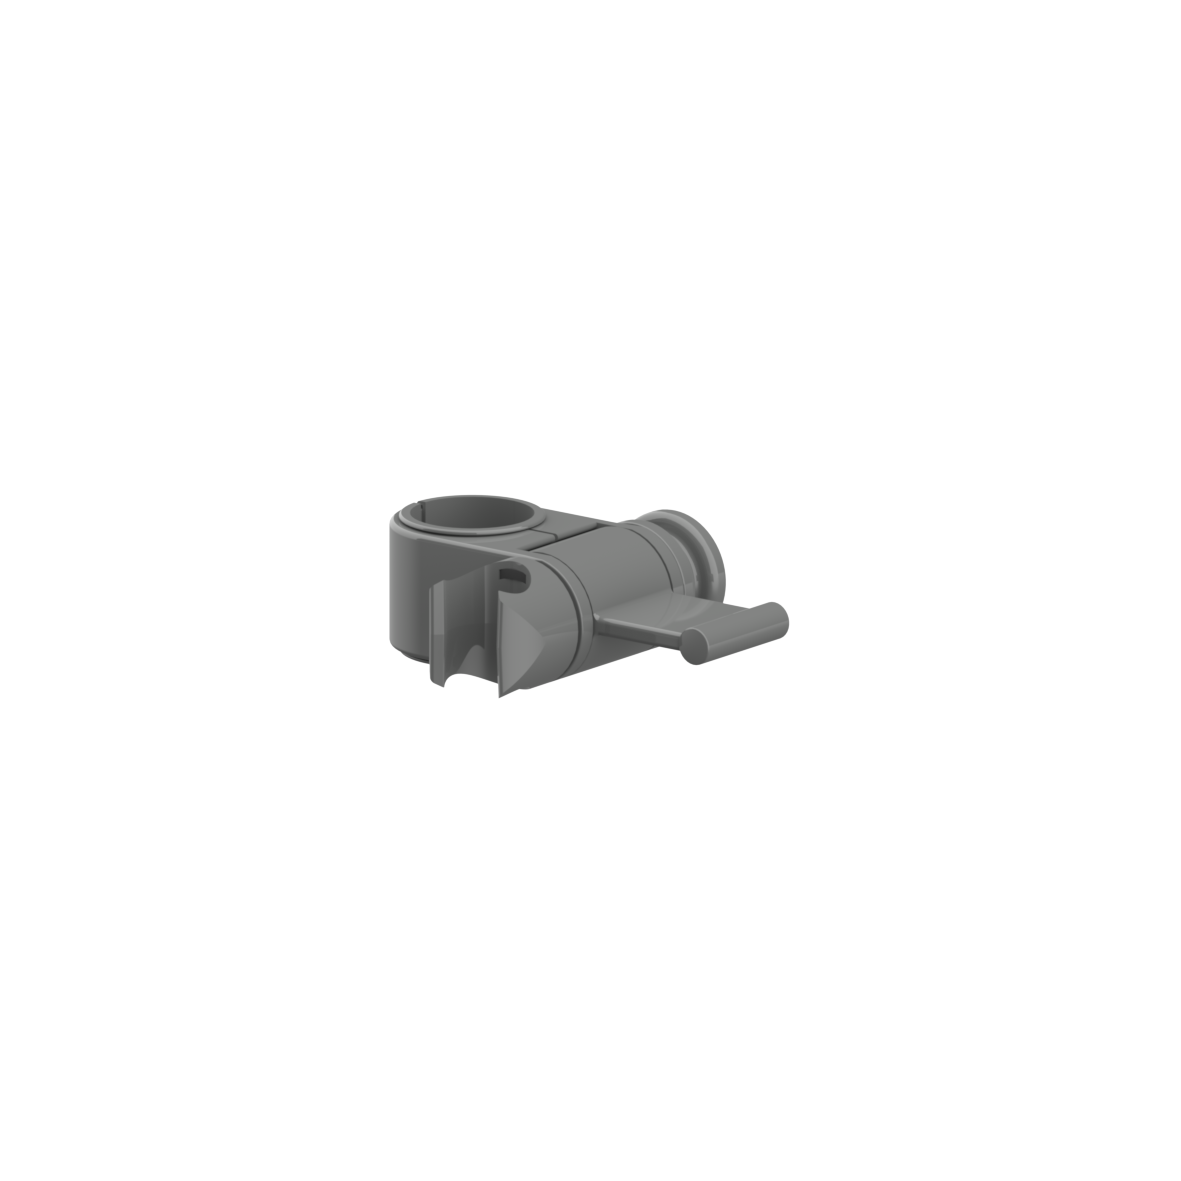 Inox Care Shower head holder, 88 x 34 x 113 mm, Dark grey